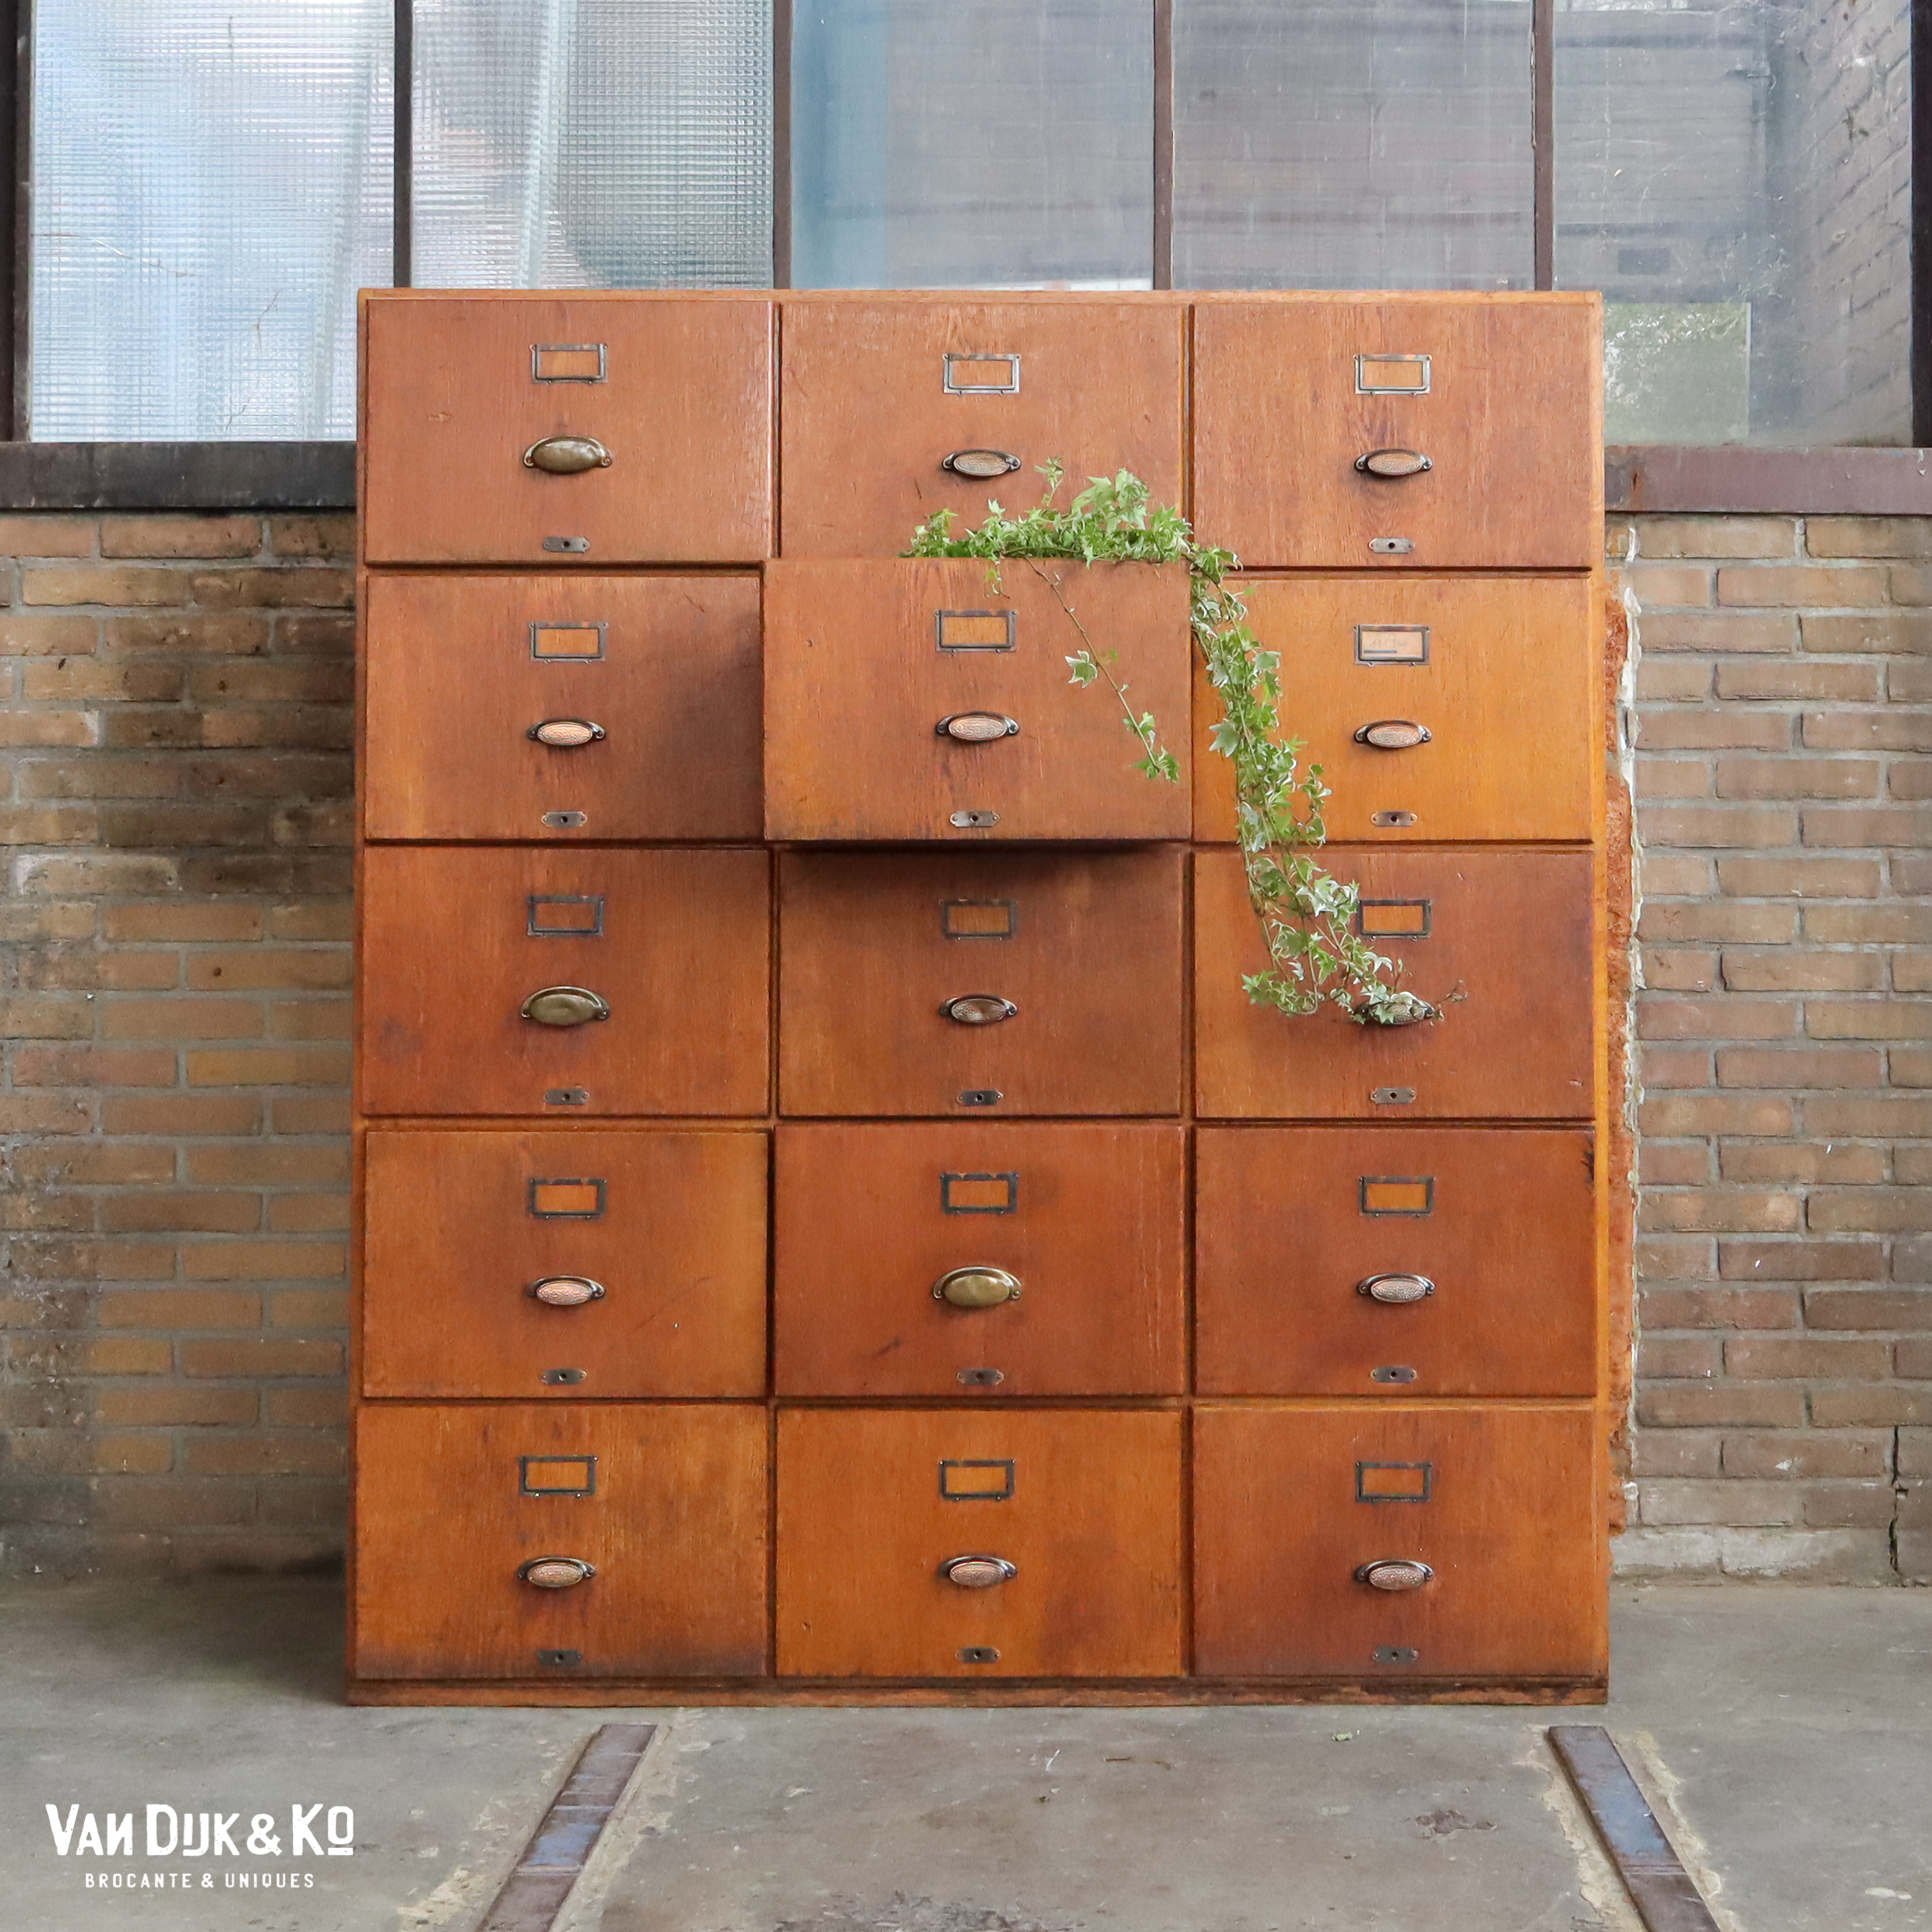 Losjes Afstotend auditorium Vintage houten archiefkast » Van Dijk & Ko